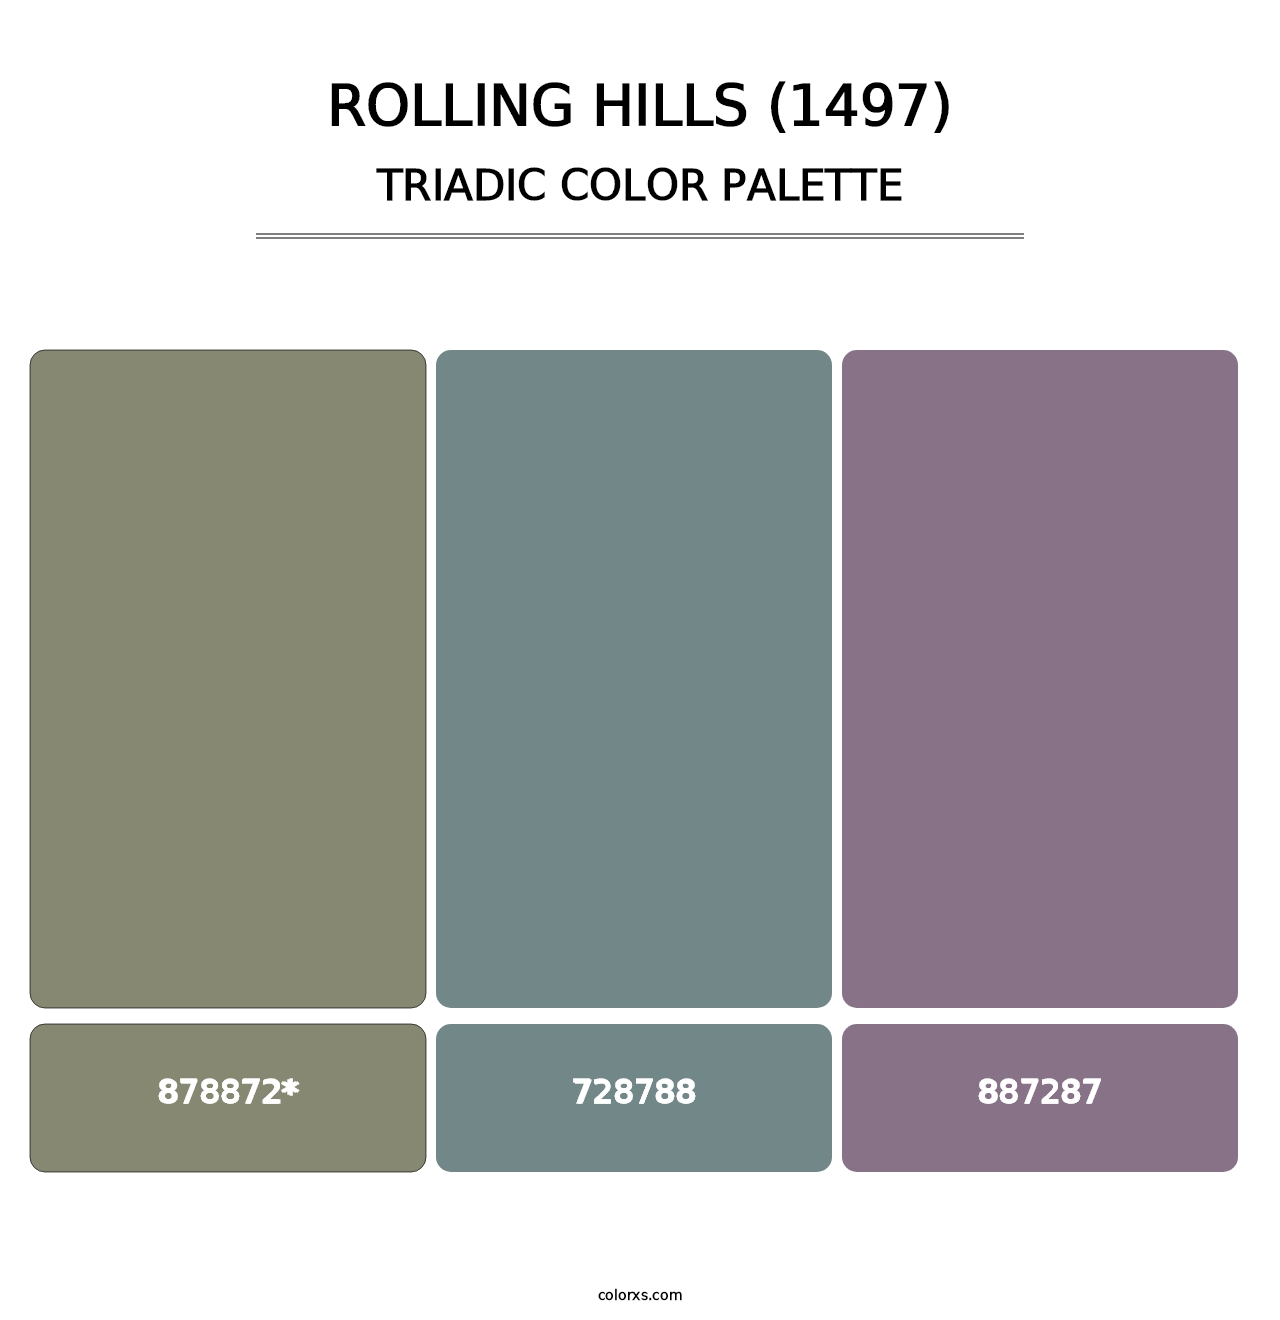 Rolling Hills (1497) - Triadic Color Palette